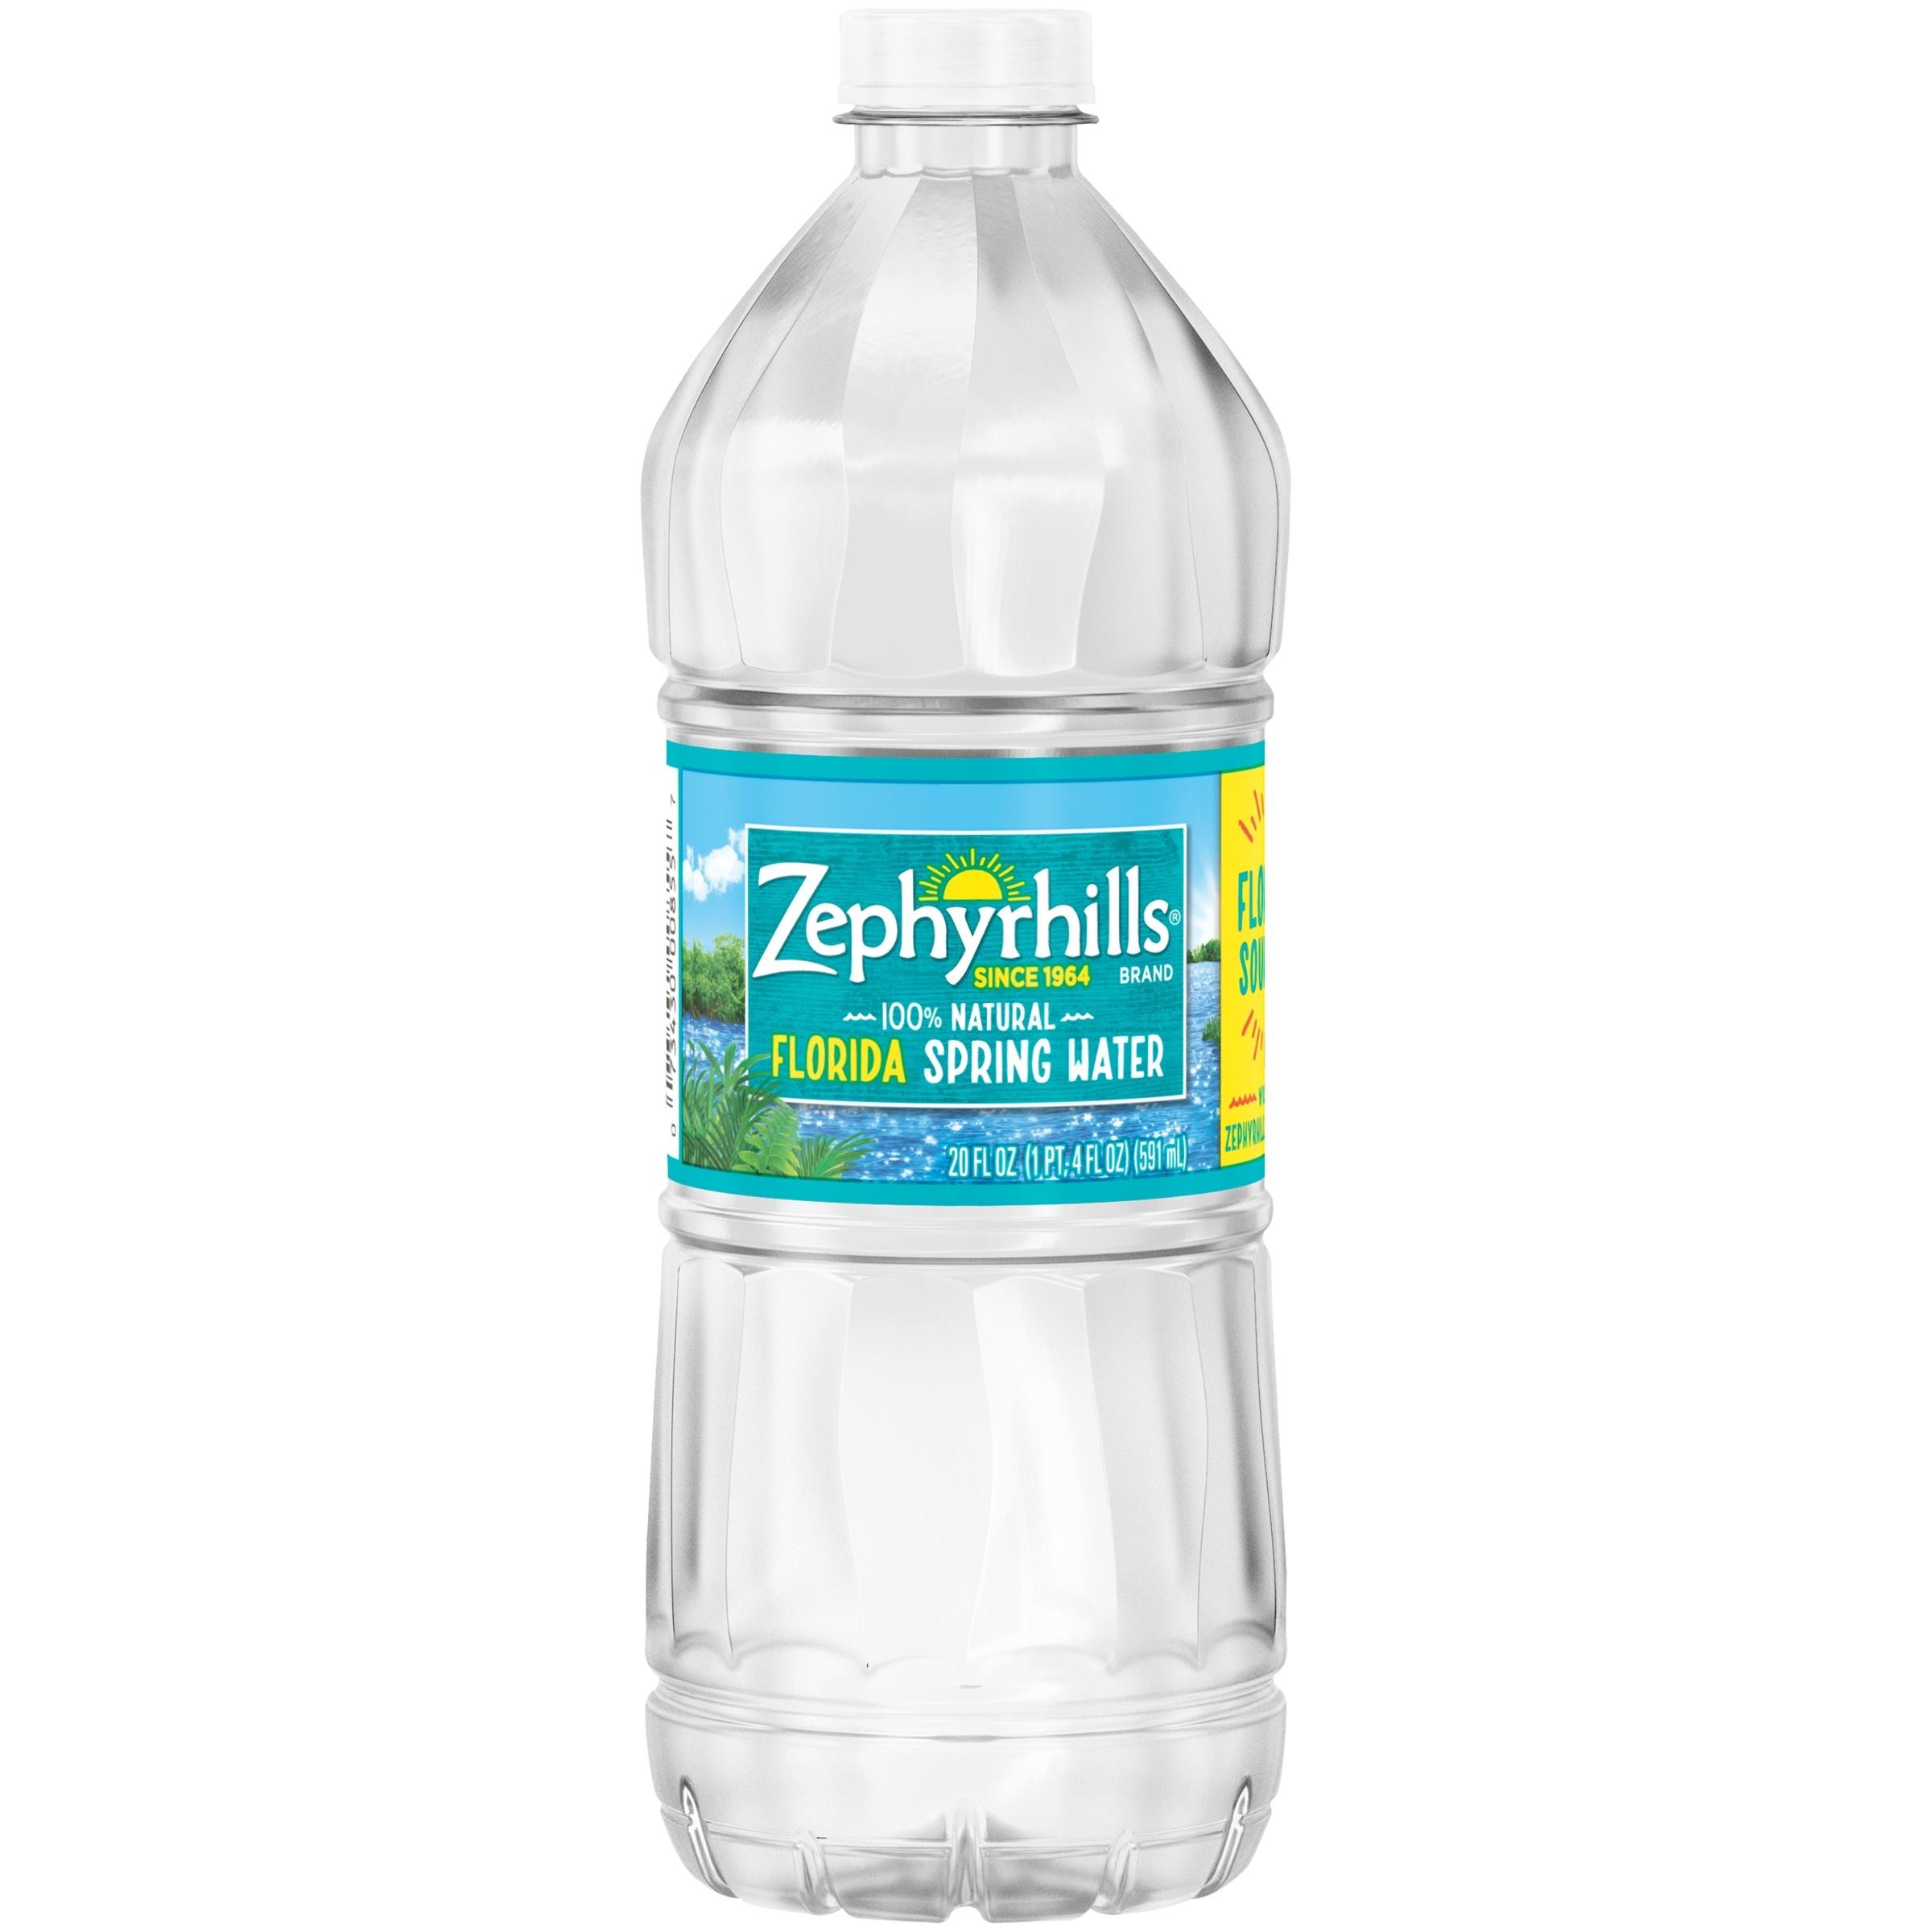 Zephyrhills Brand 100% Natural Spring Water, 20 Oz